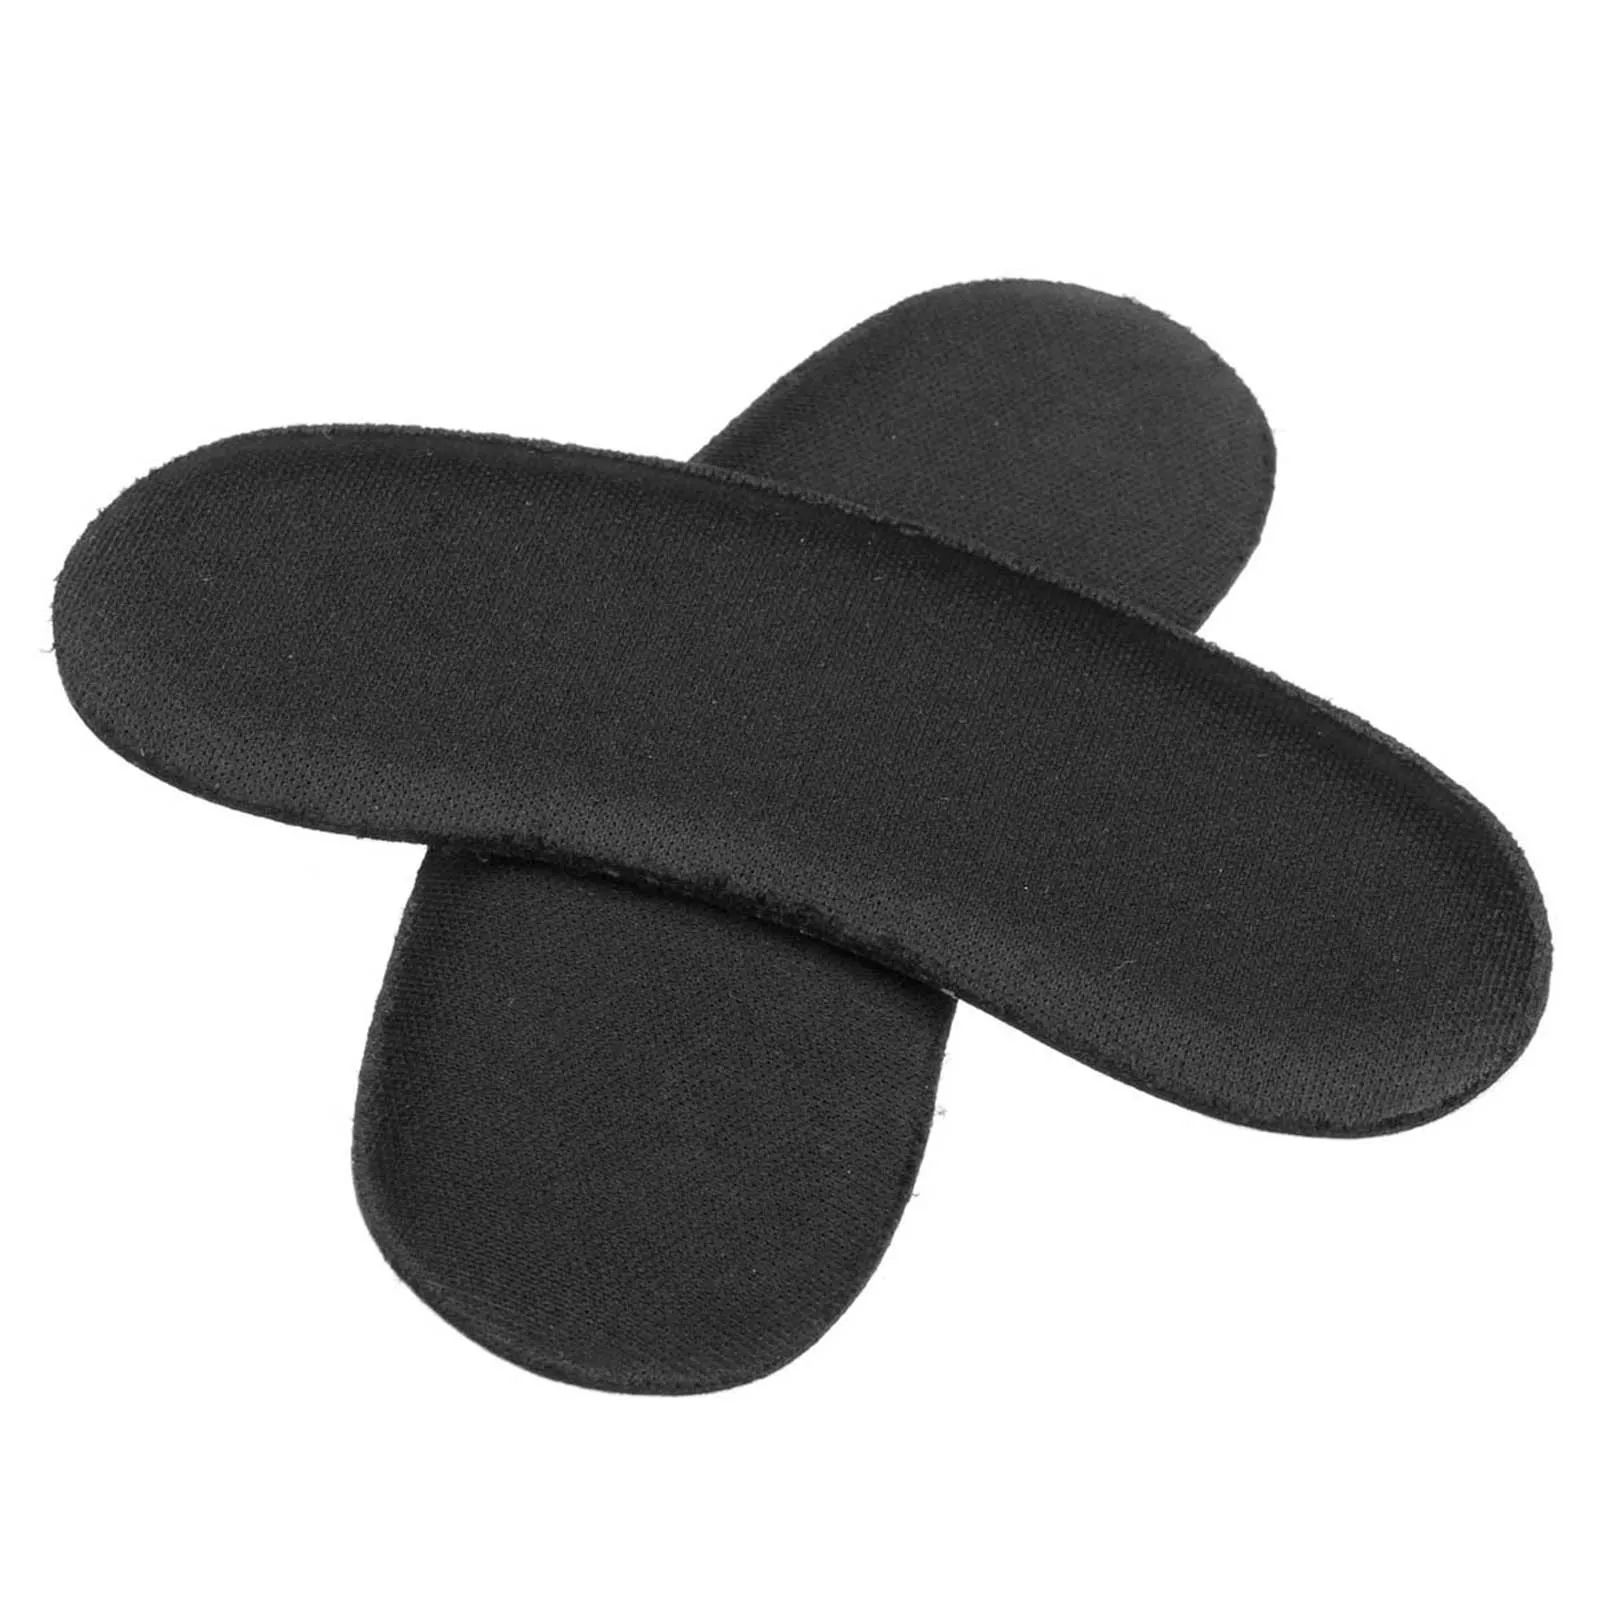 

Practical Functional Heel Cushion Sensorless Comfortable Heel Sticker for Preventing Feet Heel Abrasion